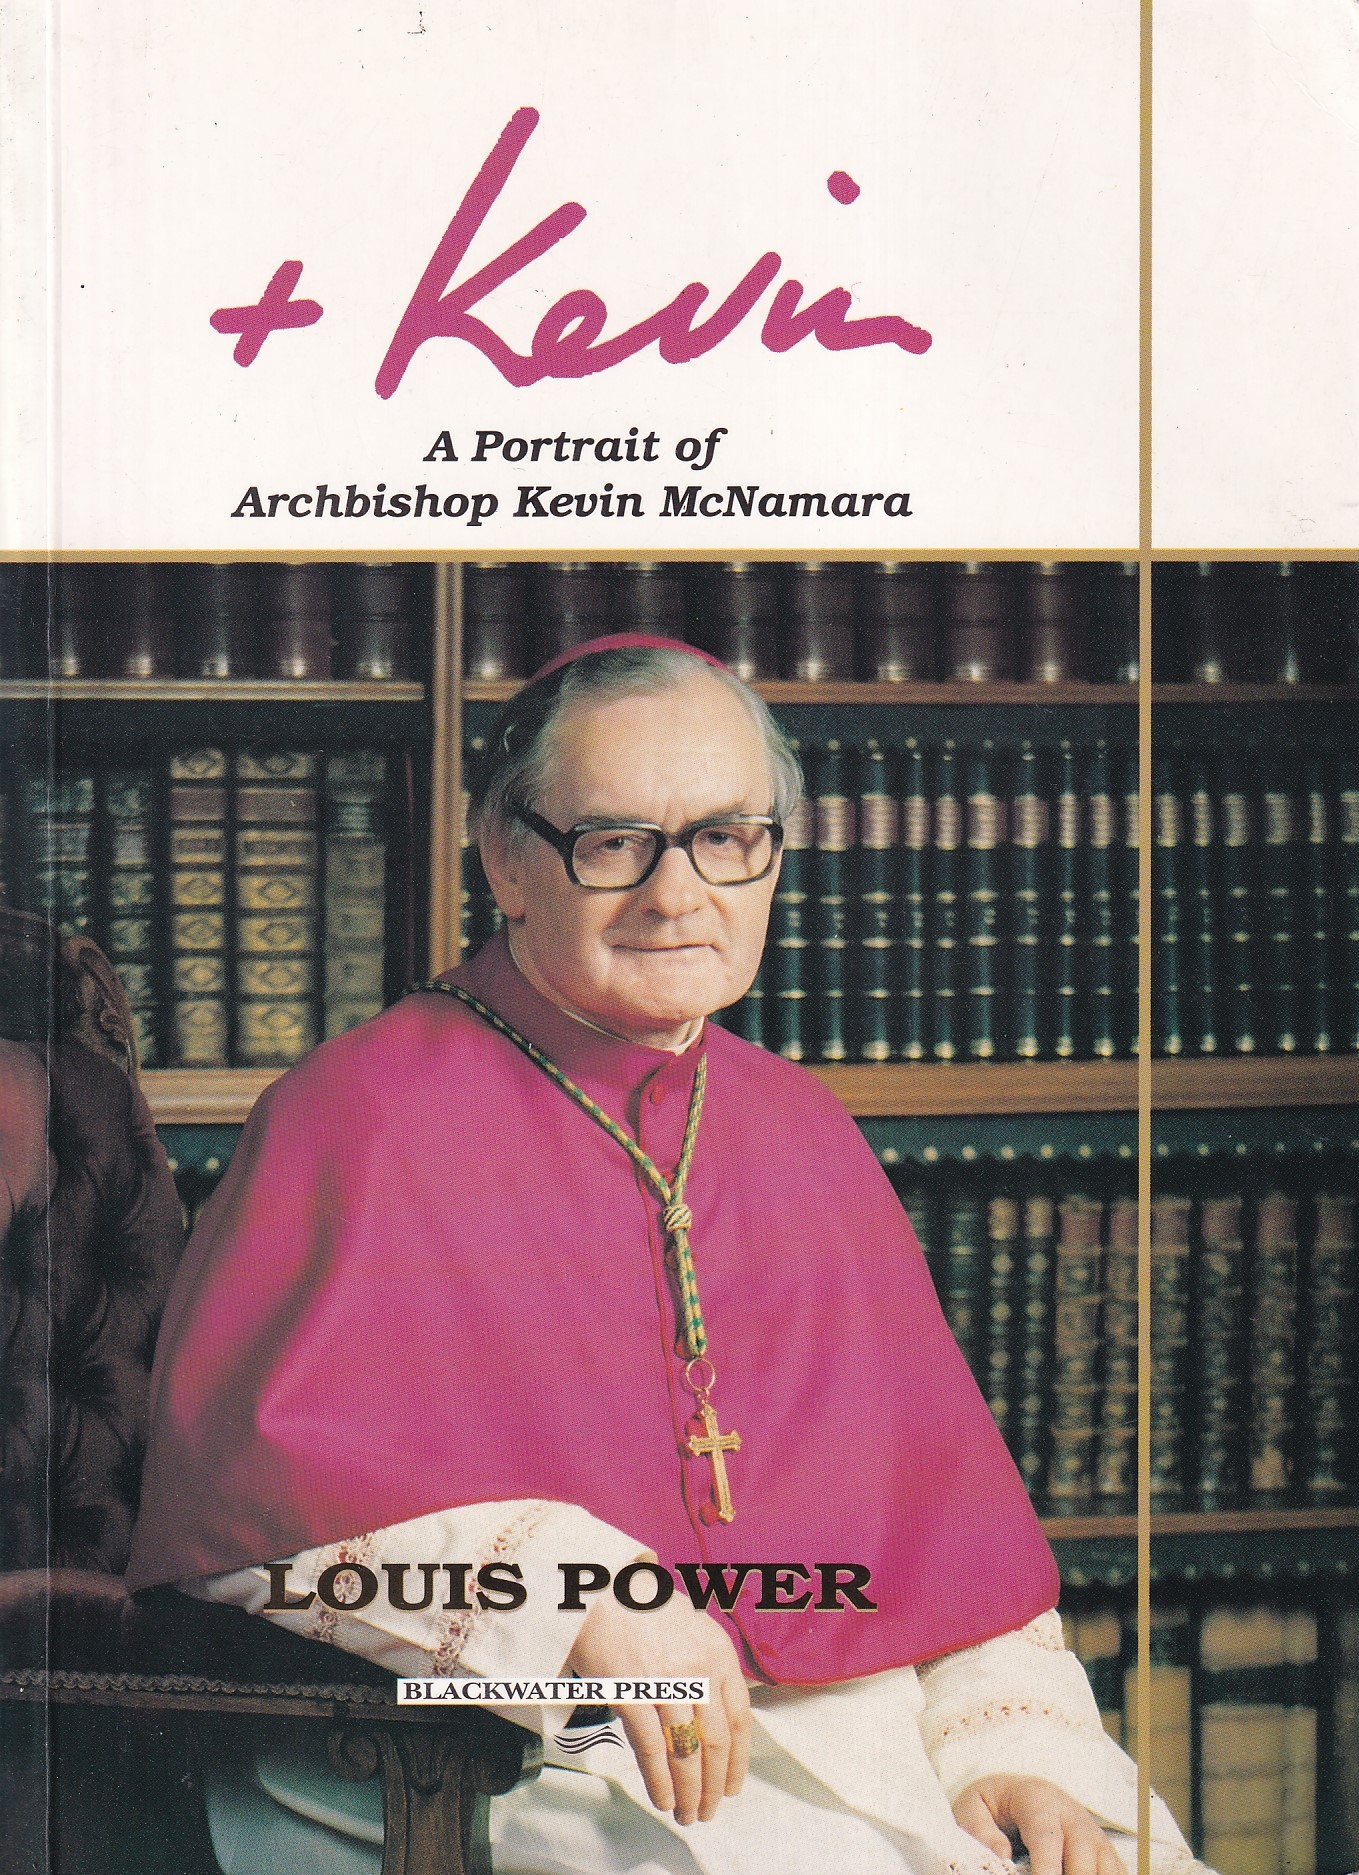 Kevin: A Portrait of Archbishop Kevin McNamara by Louis Power